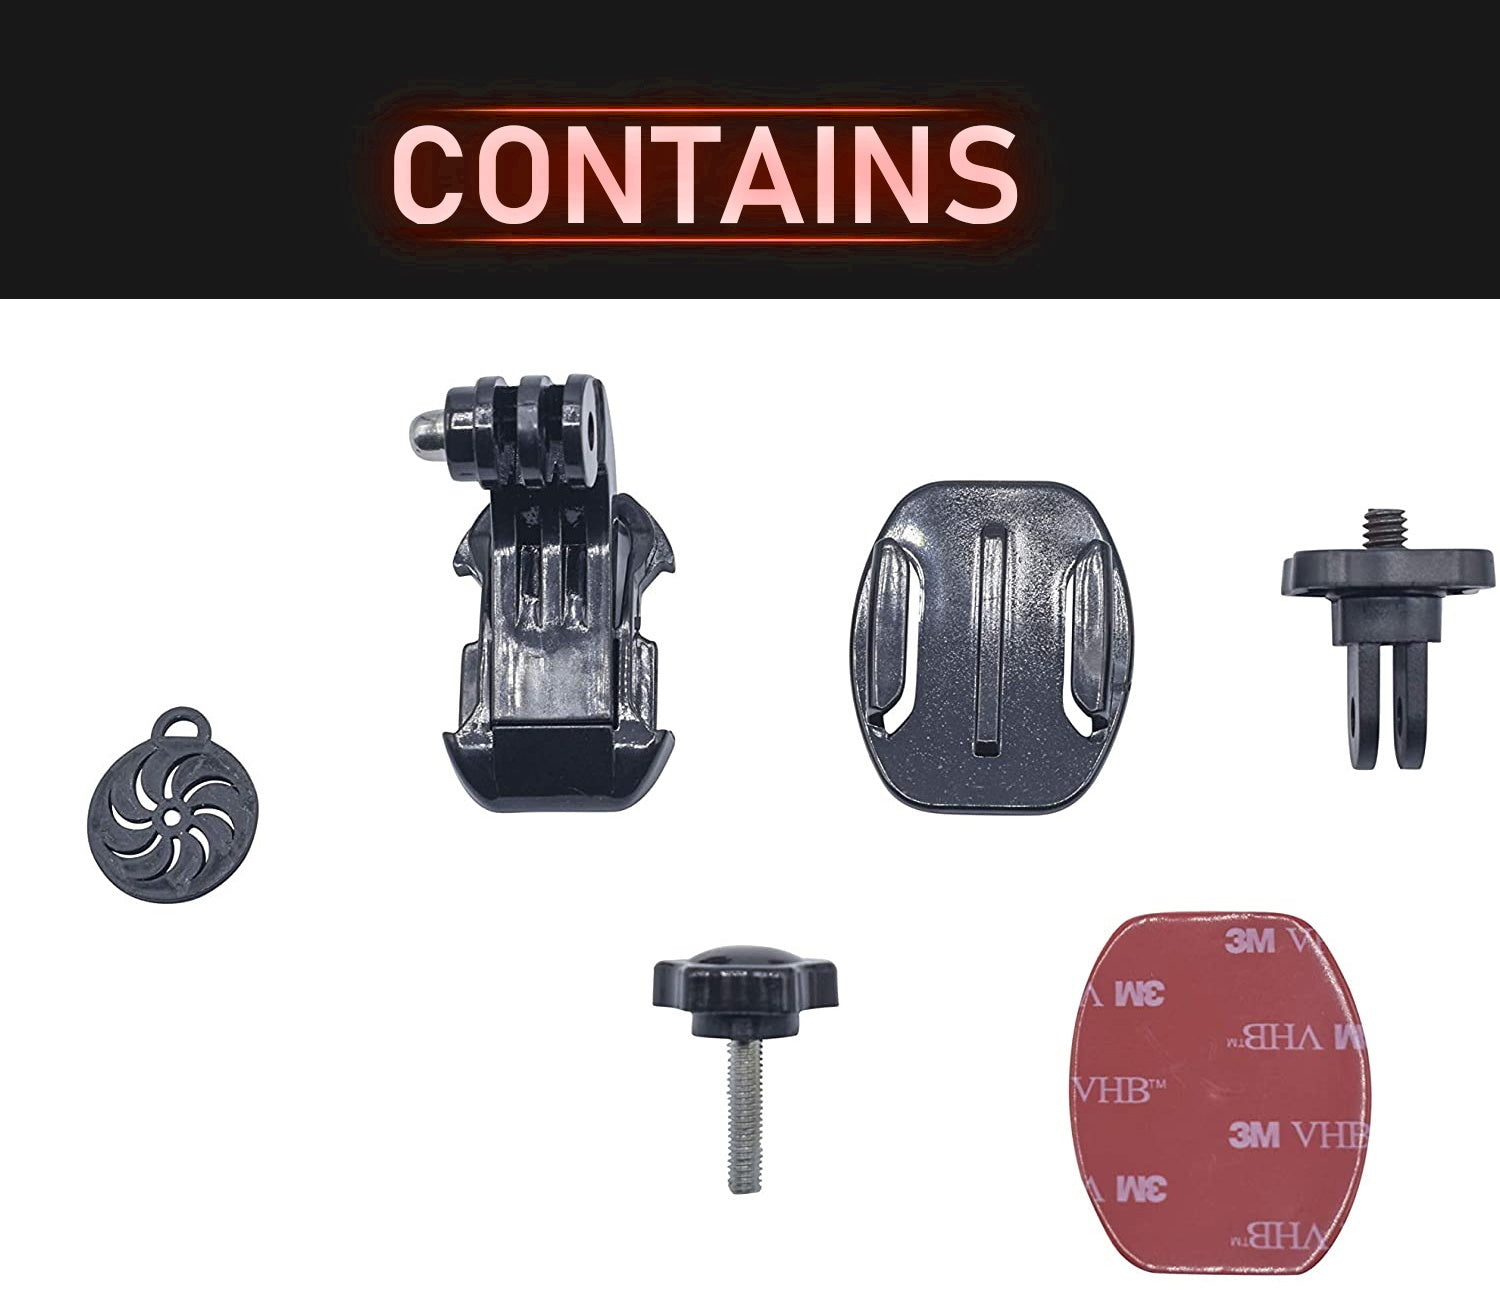 Contains: Sensor Mount bracket, wall mount, camera swivel mount, thumbscrew, adhesive, medalion 